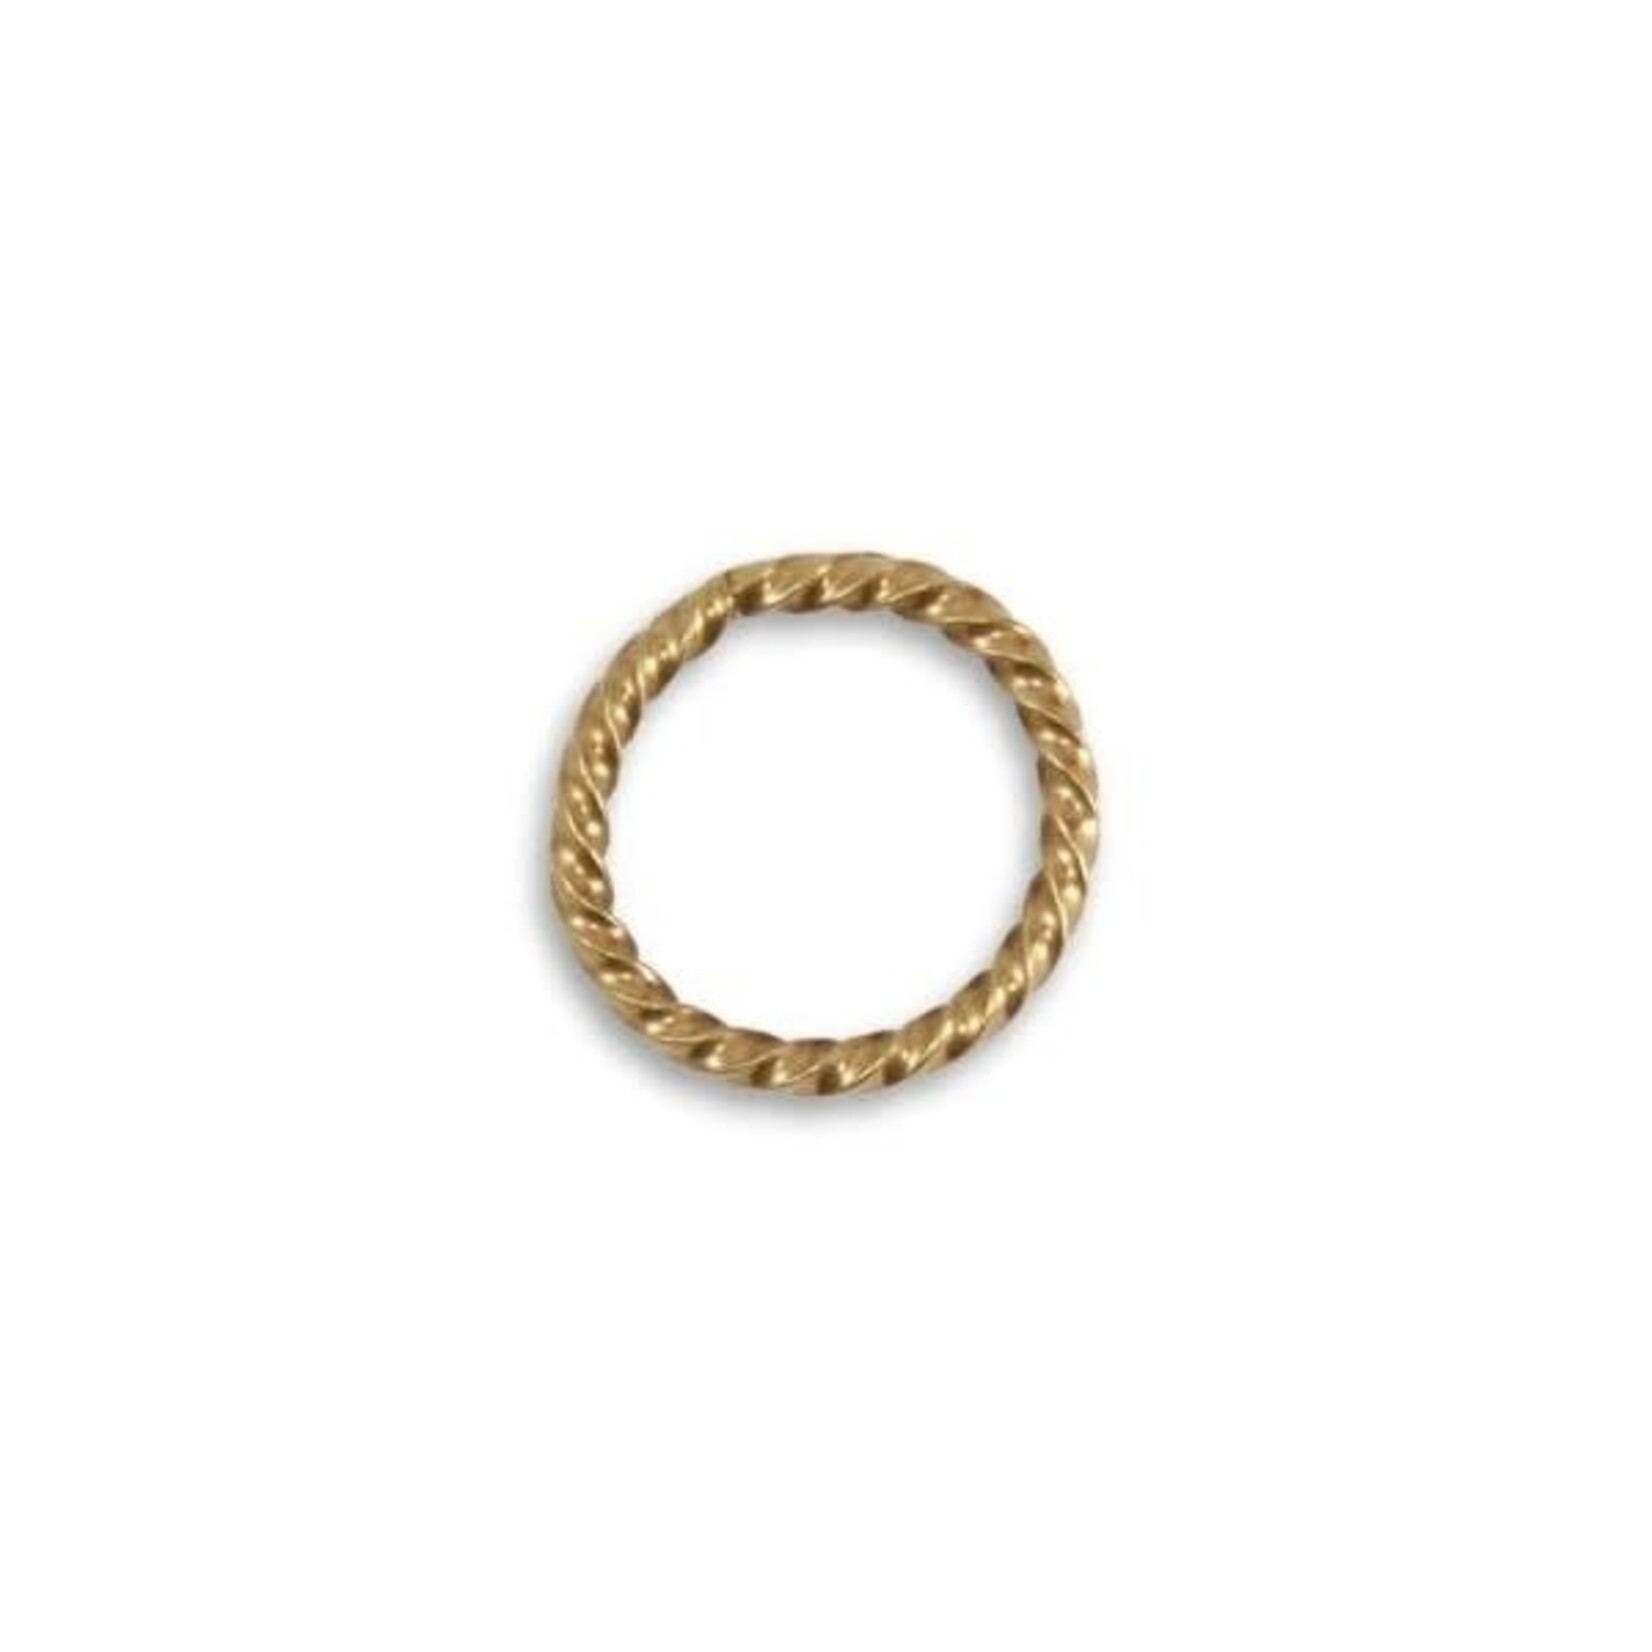 Vintaj Vintaj Vogue Brass Jump Ring Roped Cable 17mm 13g